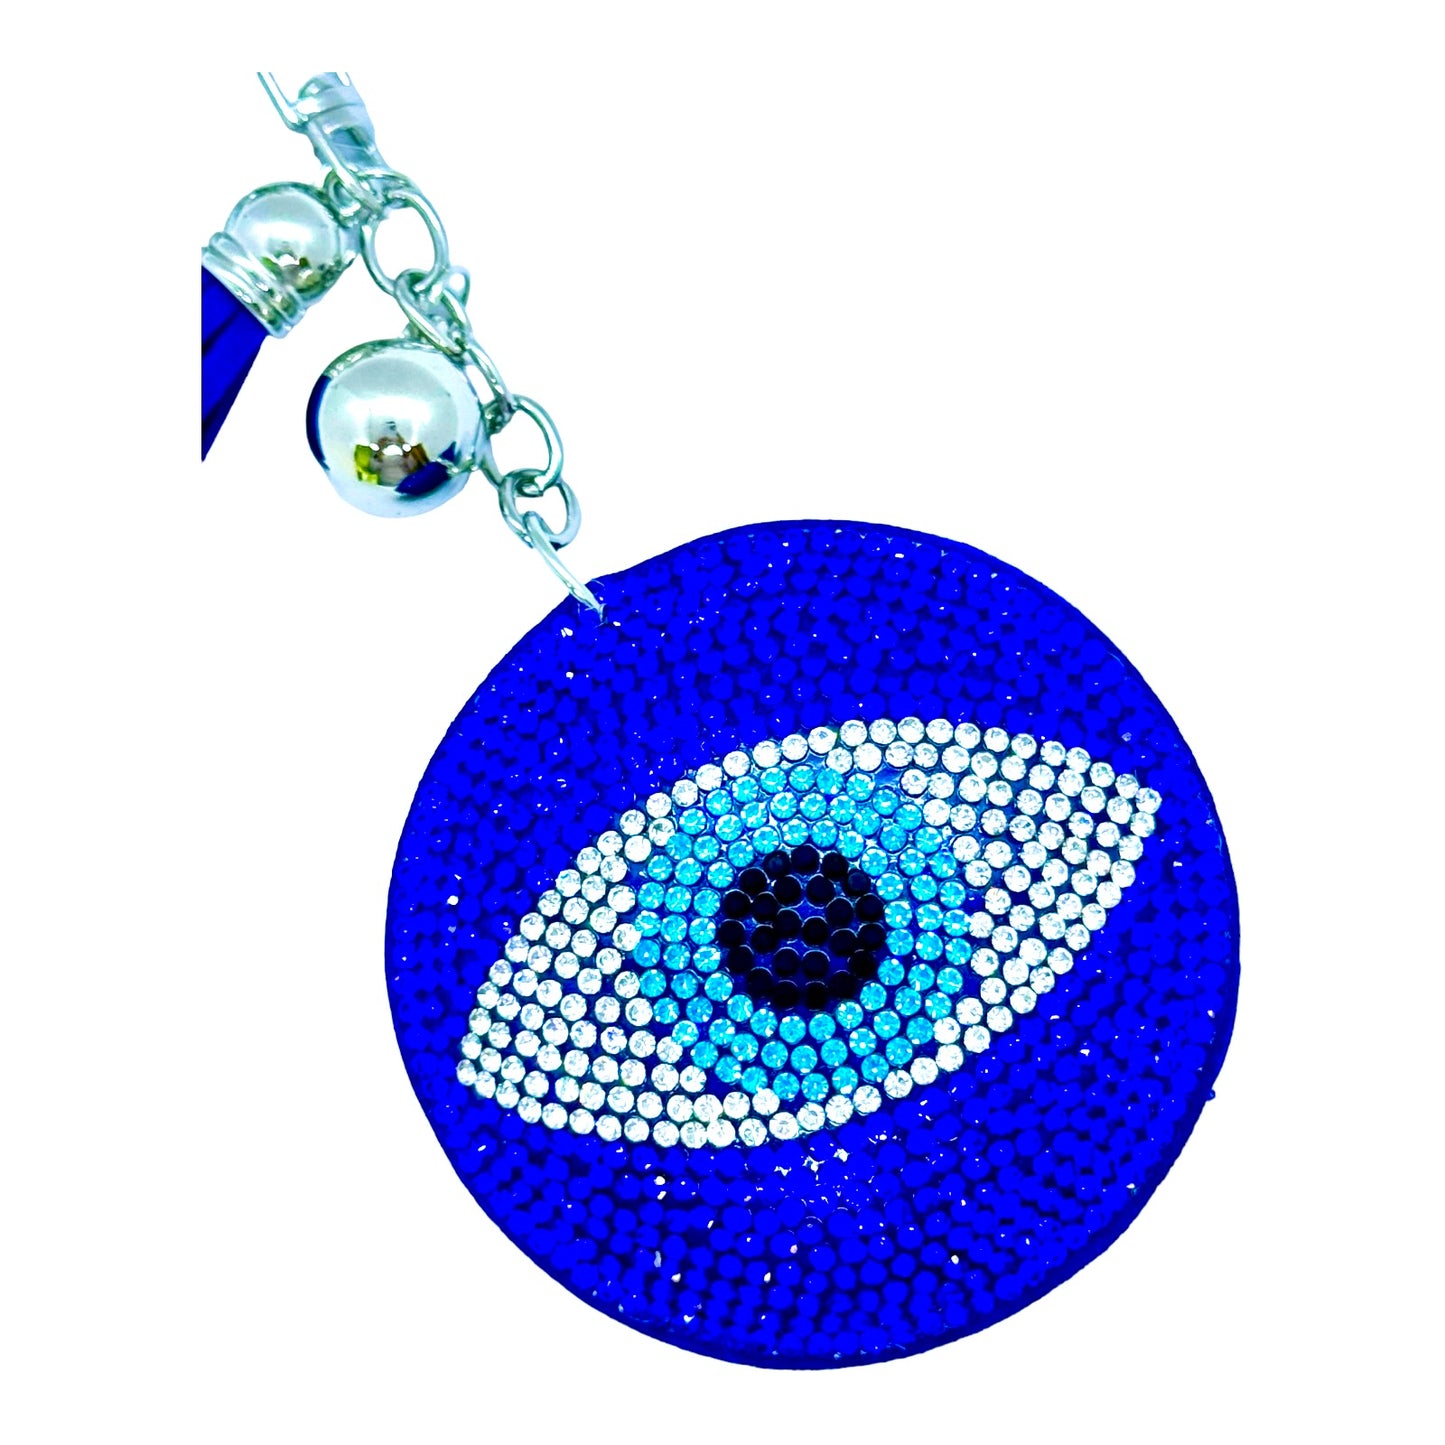 Evil Eye (Mati/Nazar Dosh) Rhinestone Puff Bling Keychain